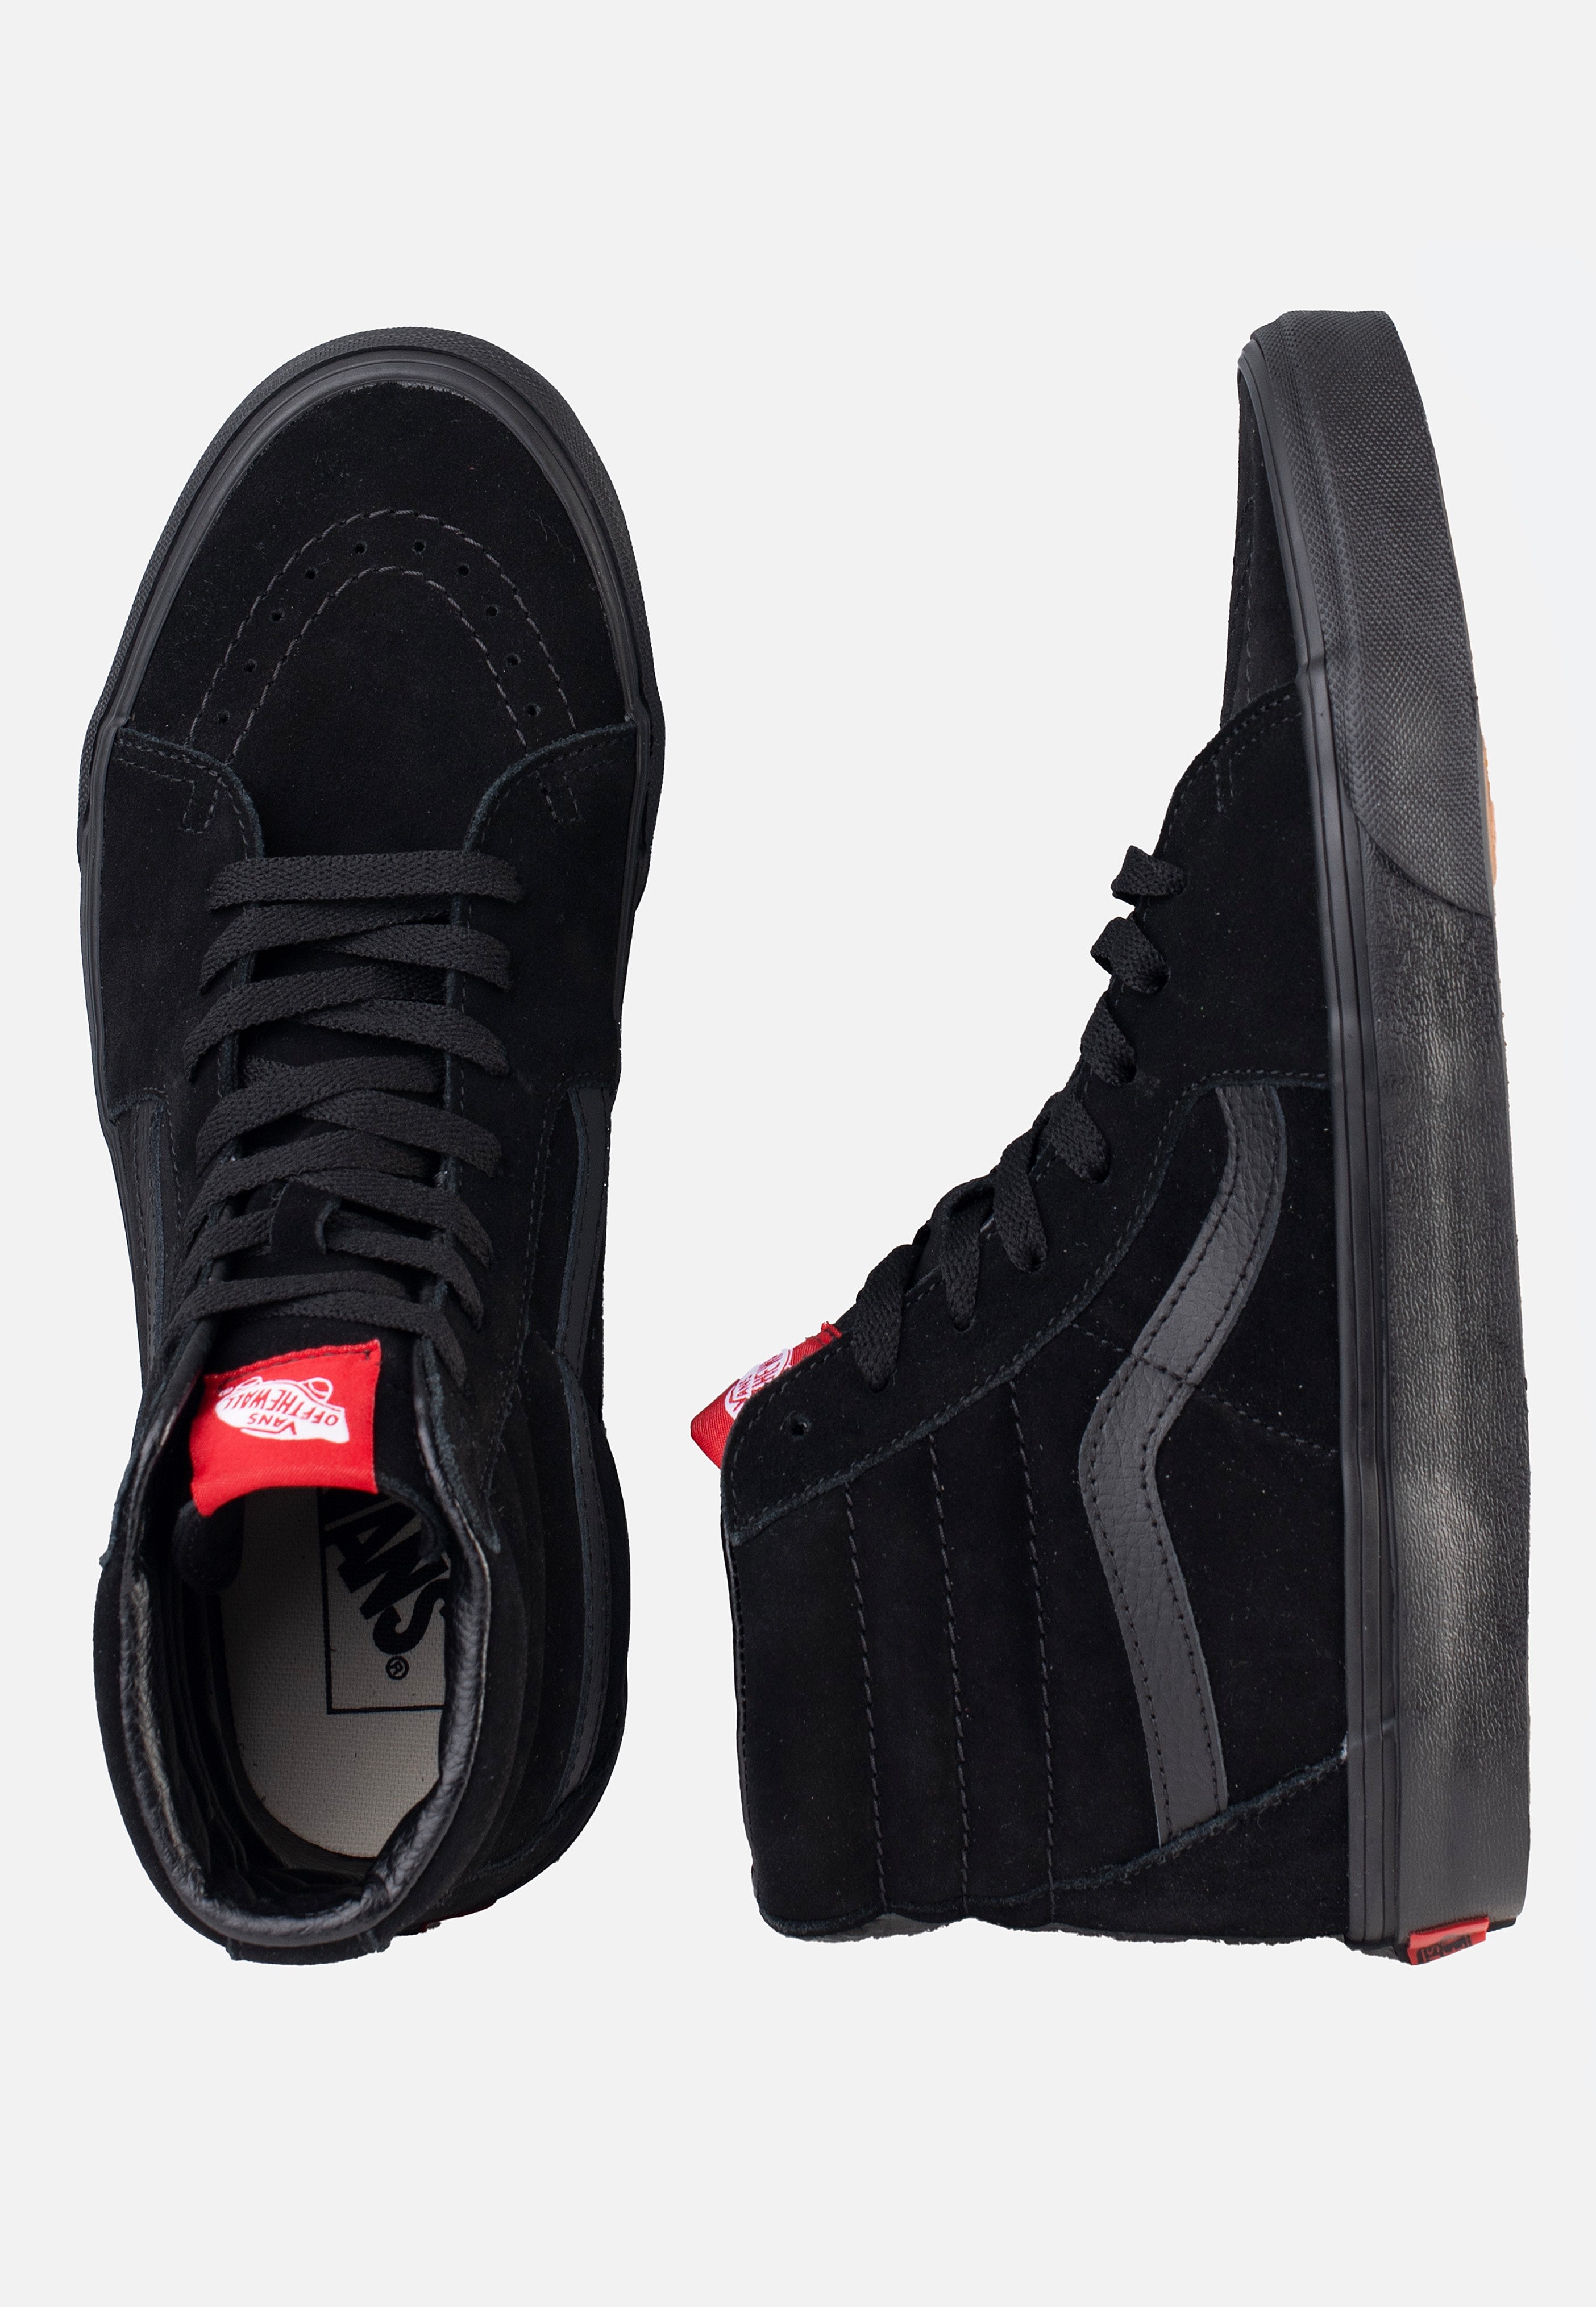 Vans - Sk8 Hi Black/Black - Shoes